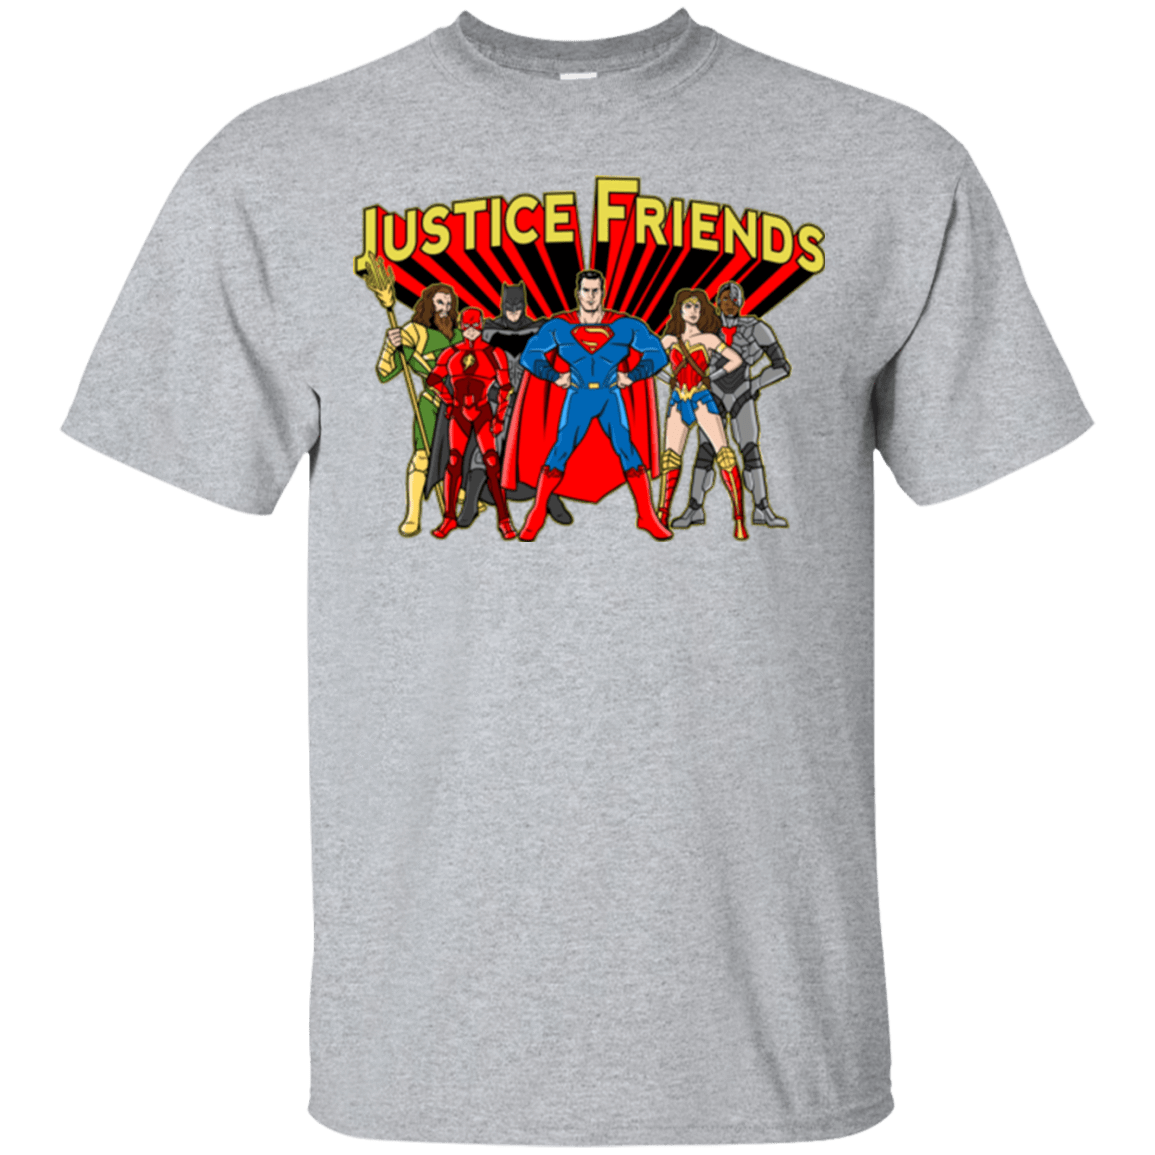 T-Shirts Sport Grey / Small Justice Friends T-Shirt